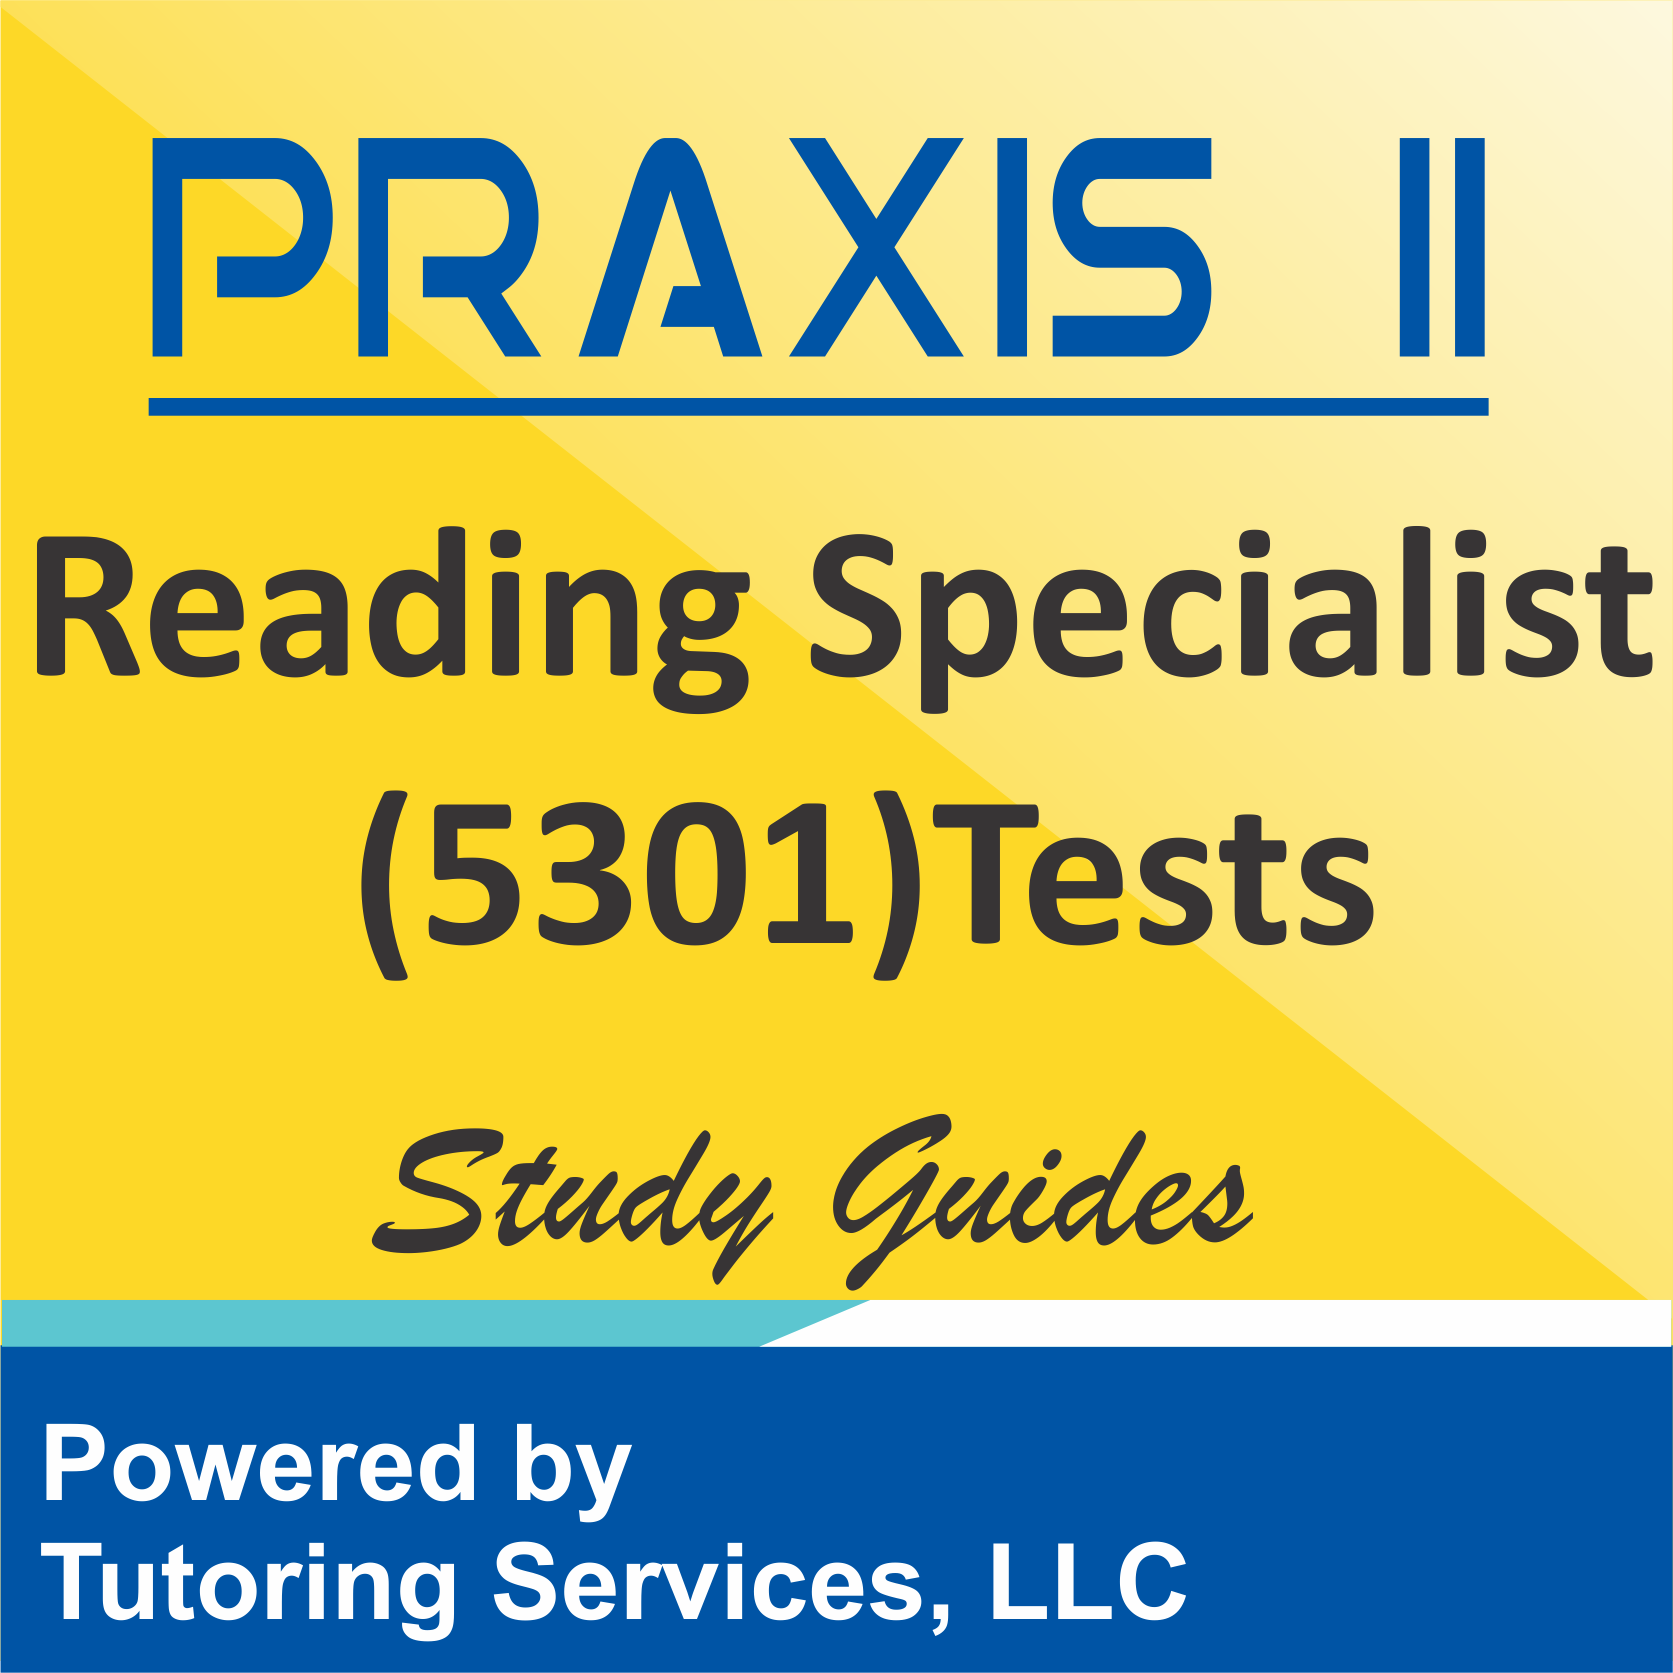 Praxis II Reading Specialist (5301) Examination Format